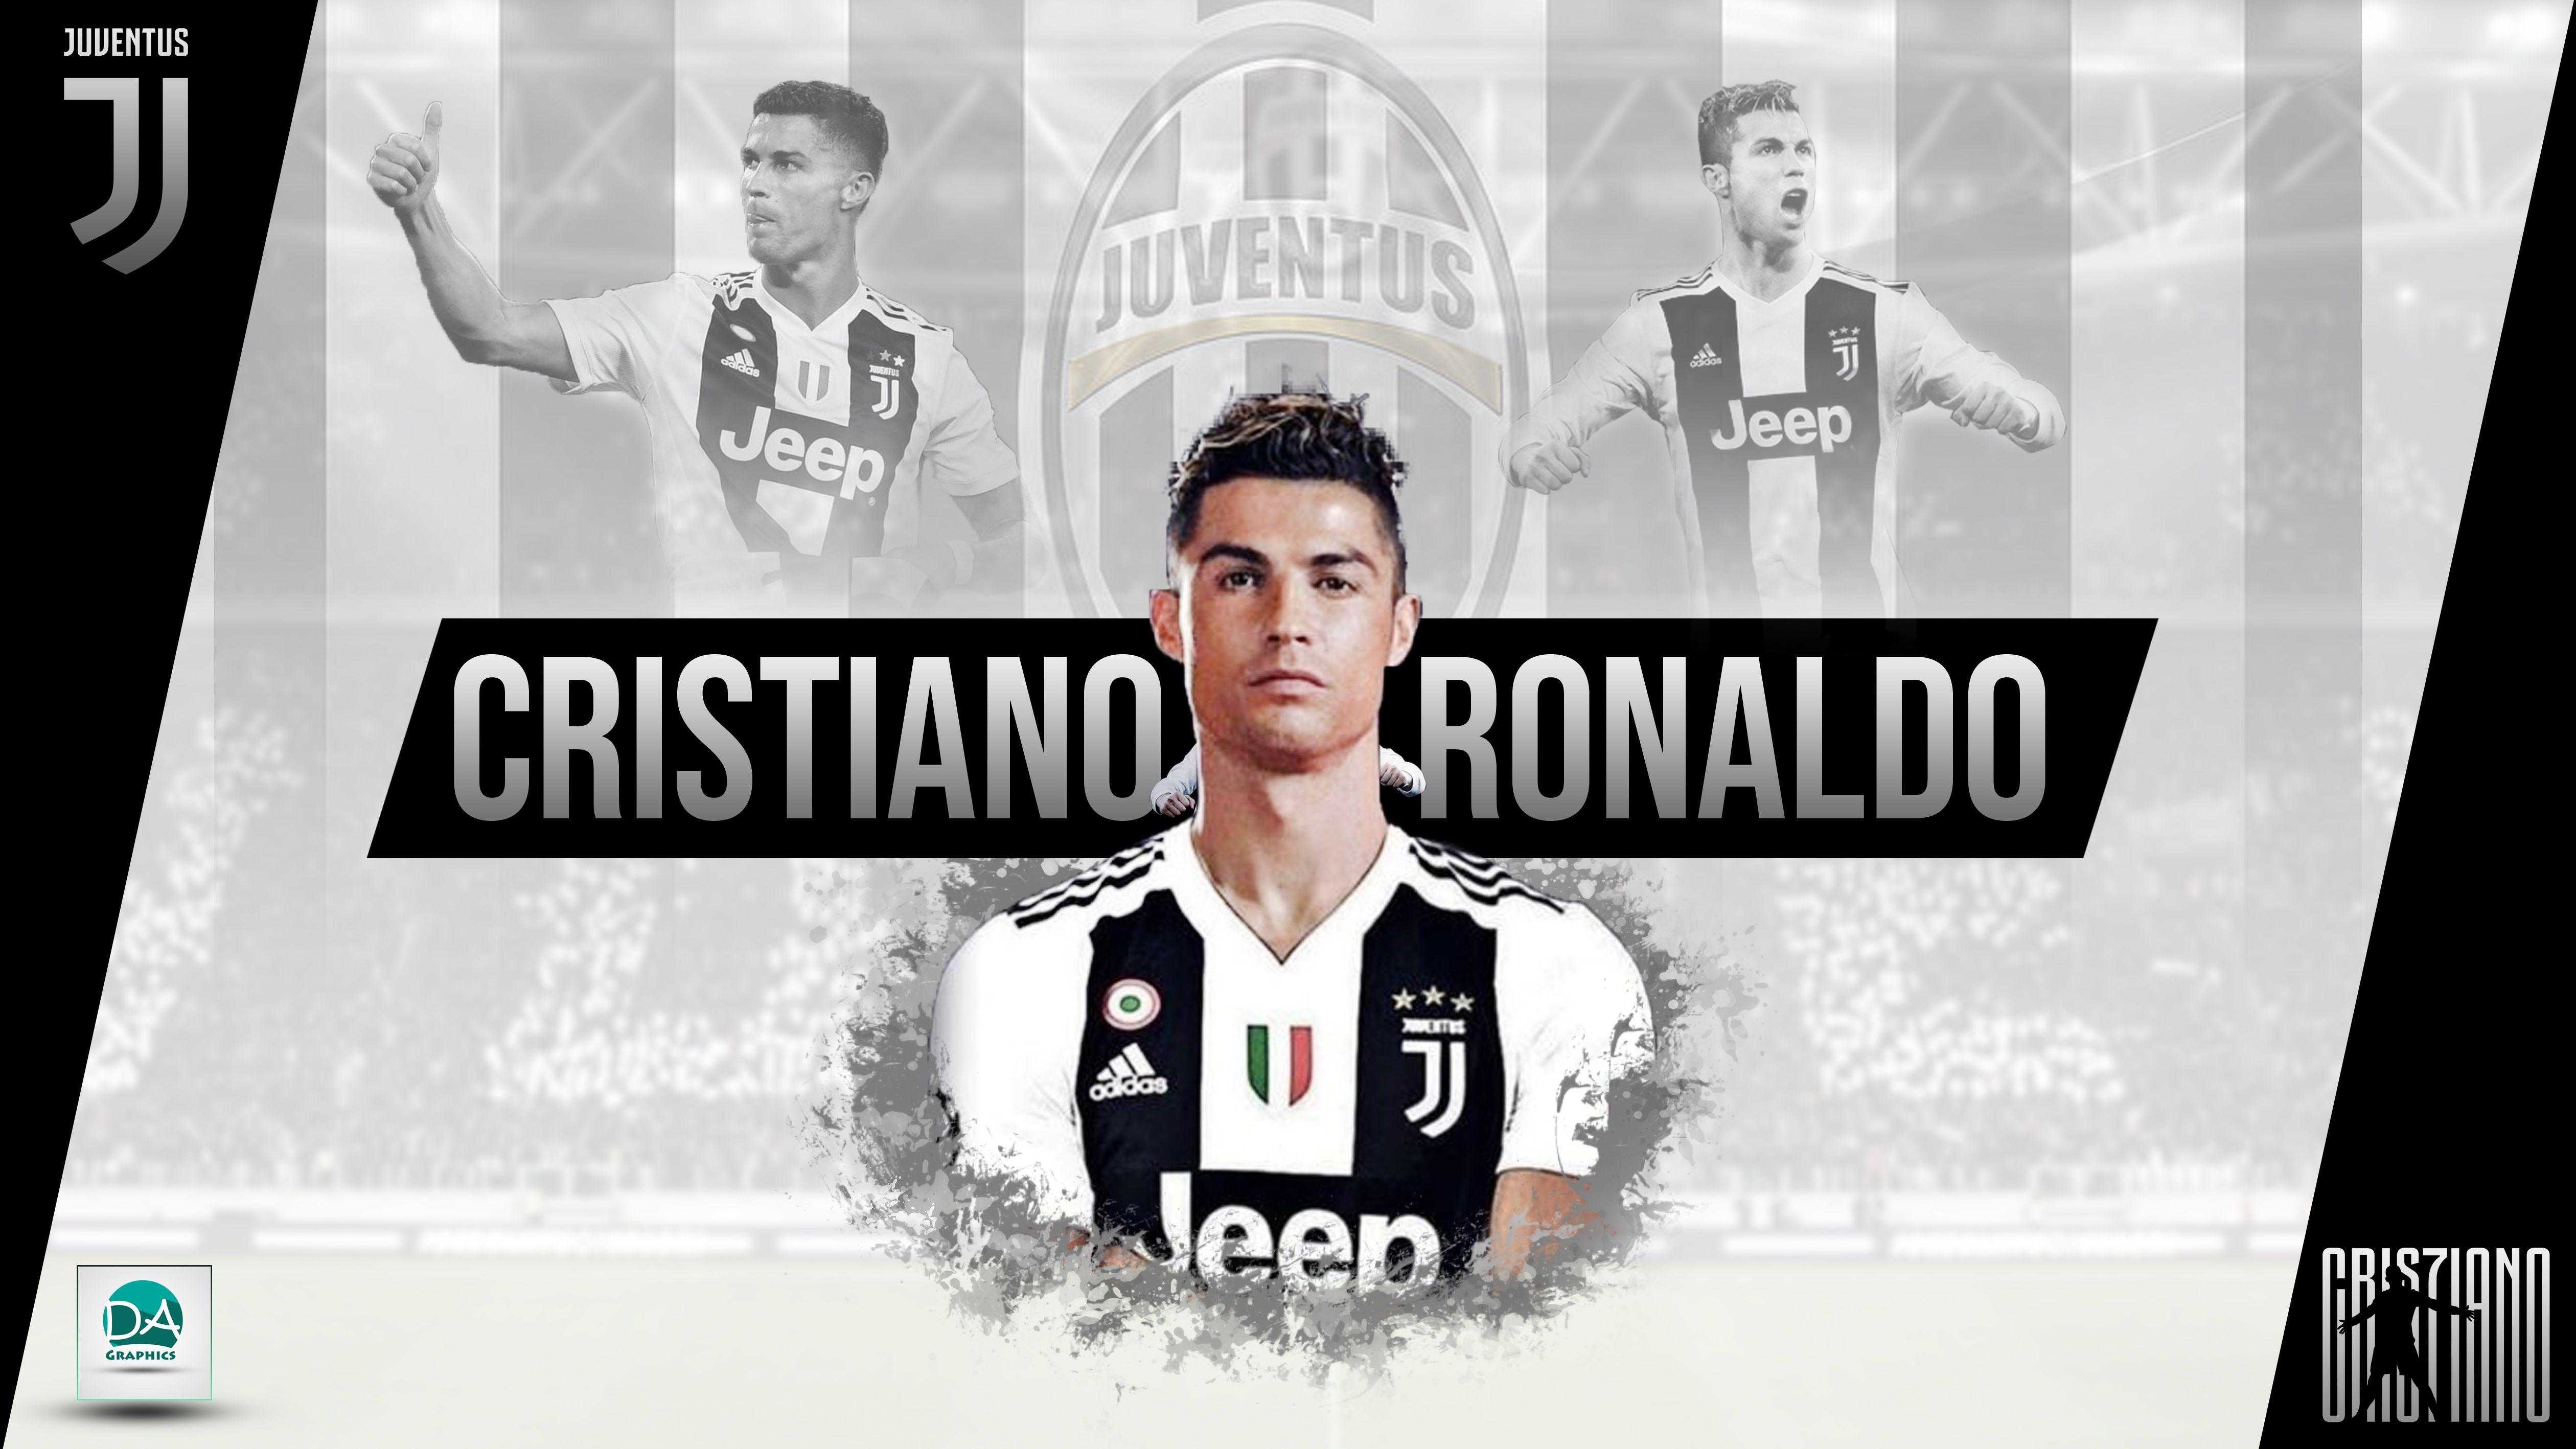 Cristiano Ronaldo Hd 2020 Wallpapers